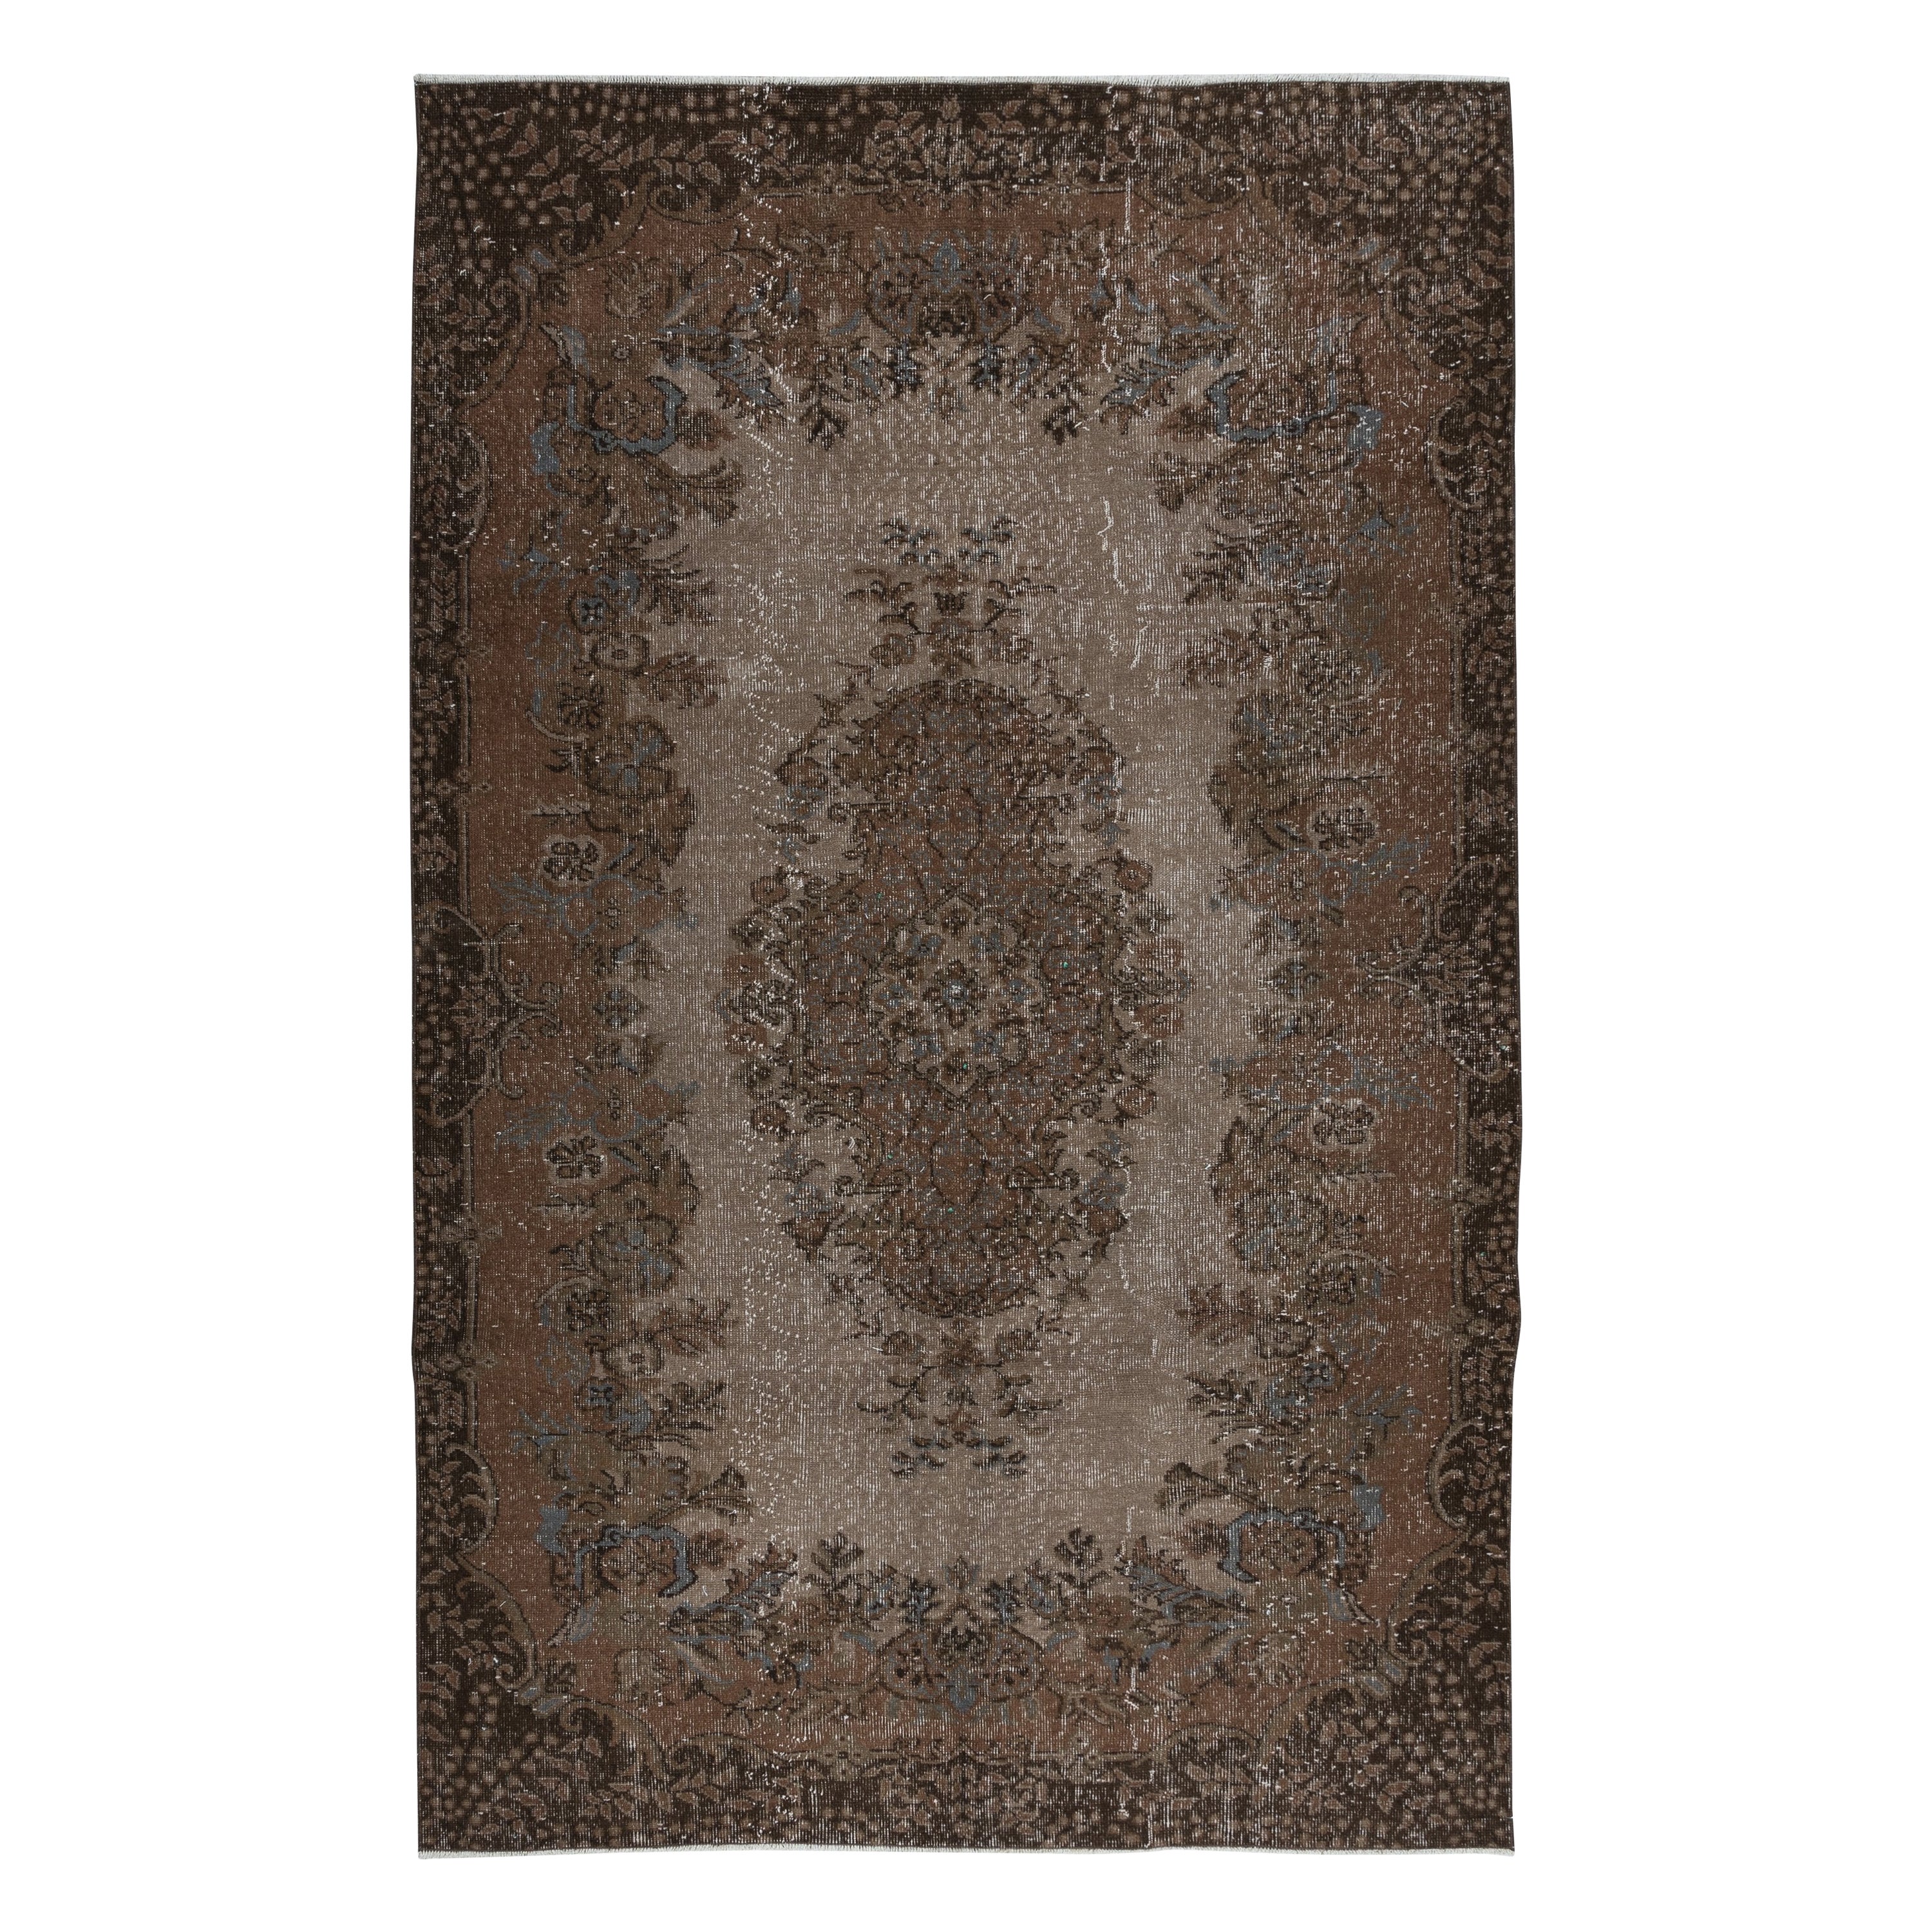 5.4x8.7 Ft Rustic Turkish Area Rug, Brown Handmade Contemporary Carpet